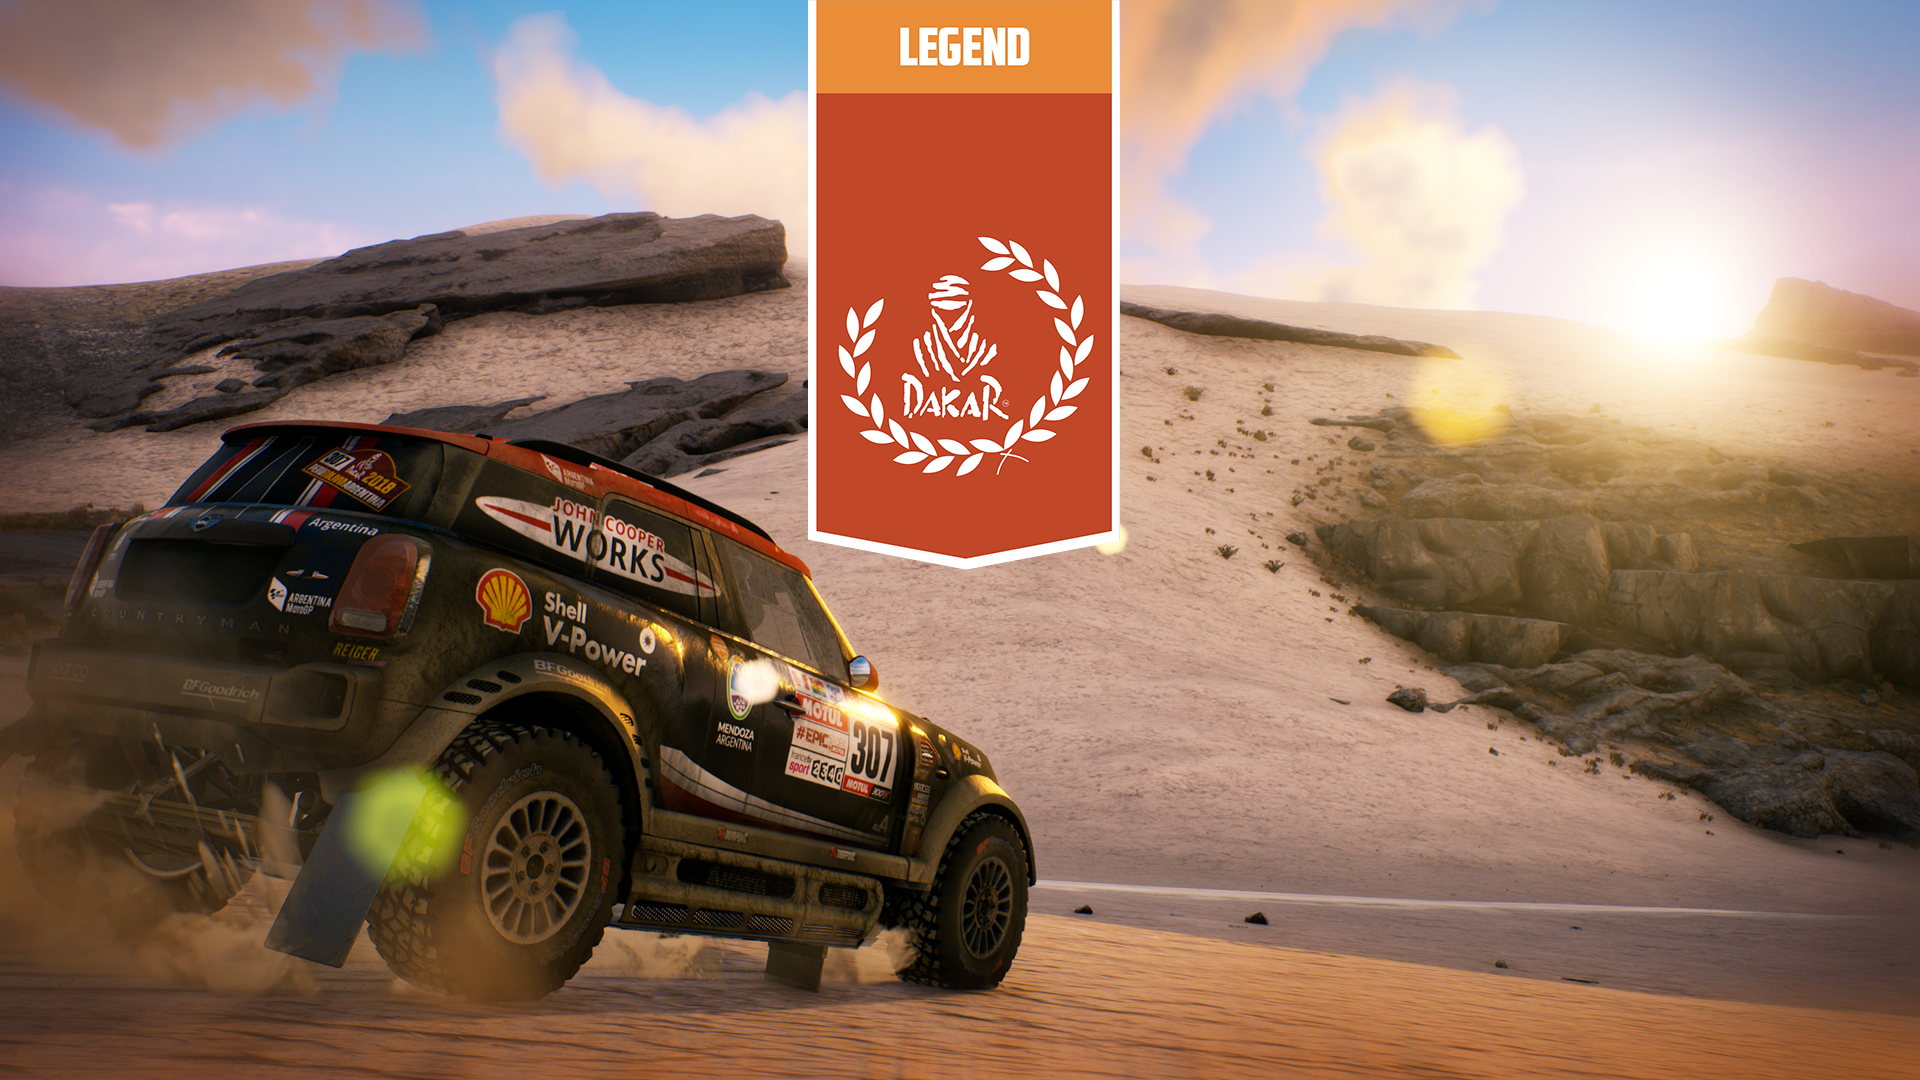 Icon for Dakar 18 Legend